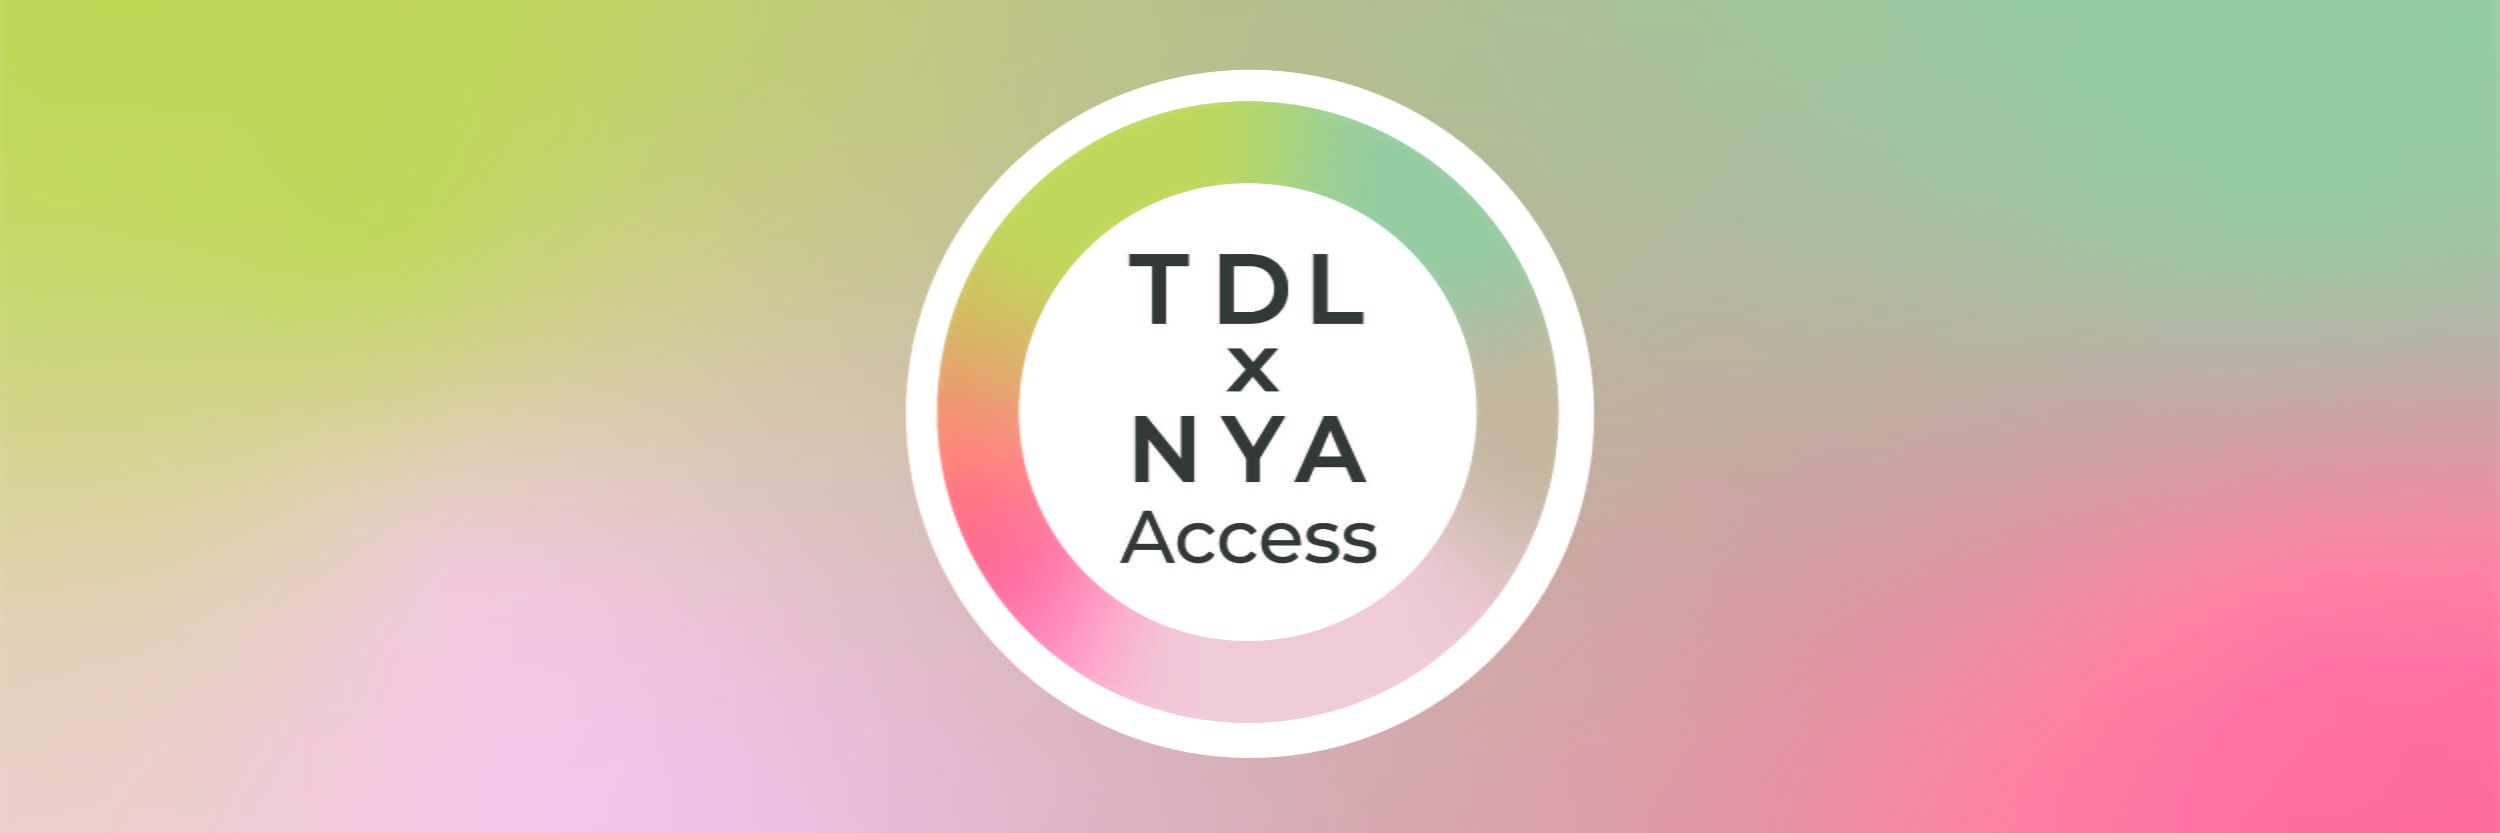 TDLxNYA Access